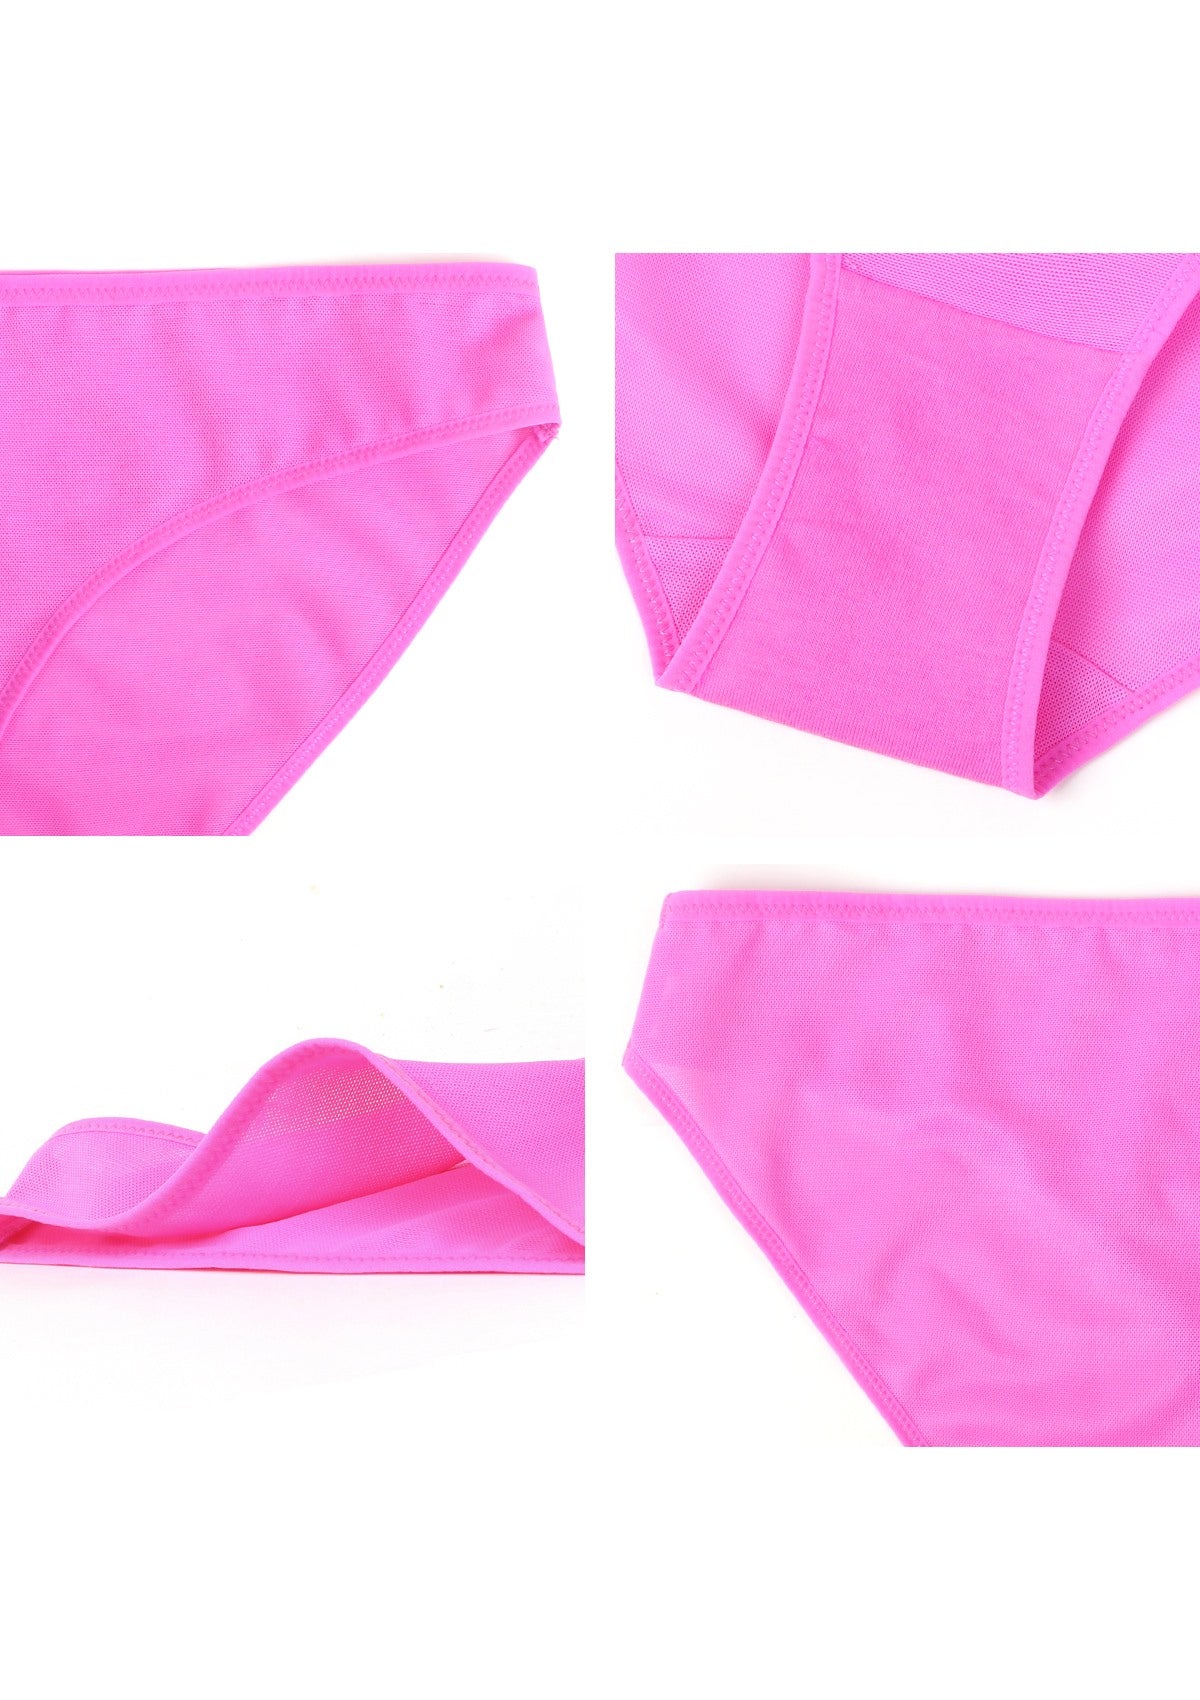 HSIA Billie Smooth Sheer Mesh Lightweight Soft Comfy Bikini Underwear - XL / Black